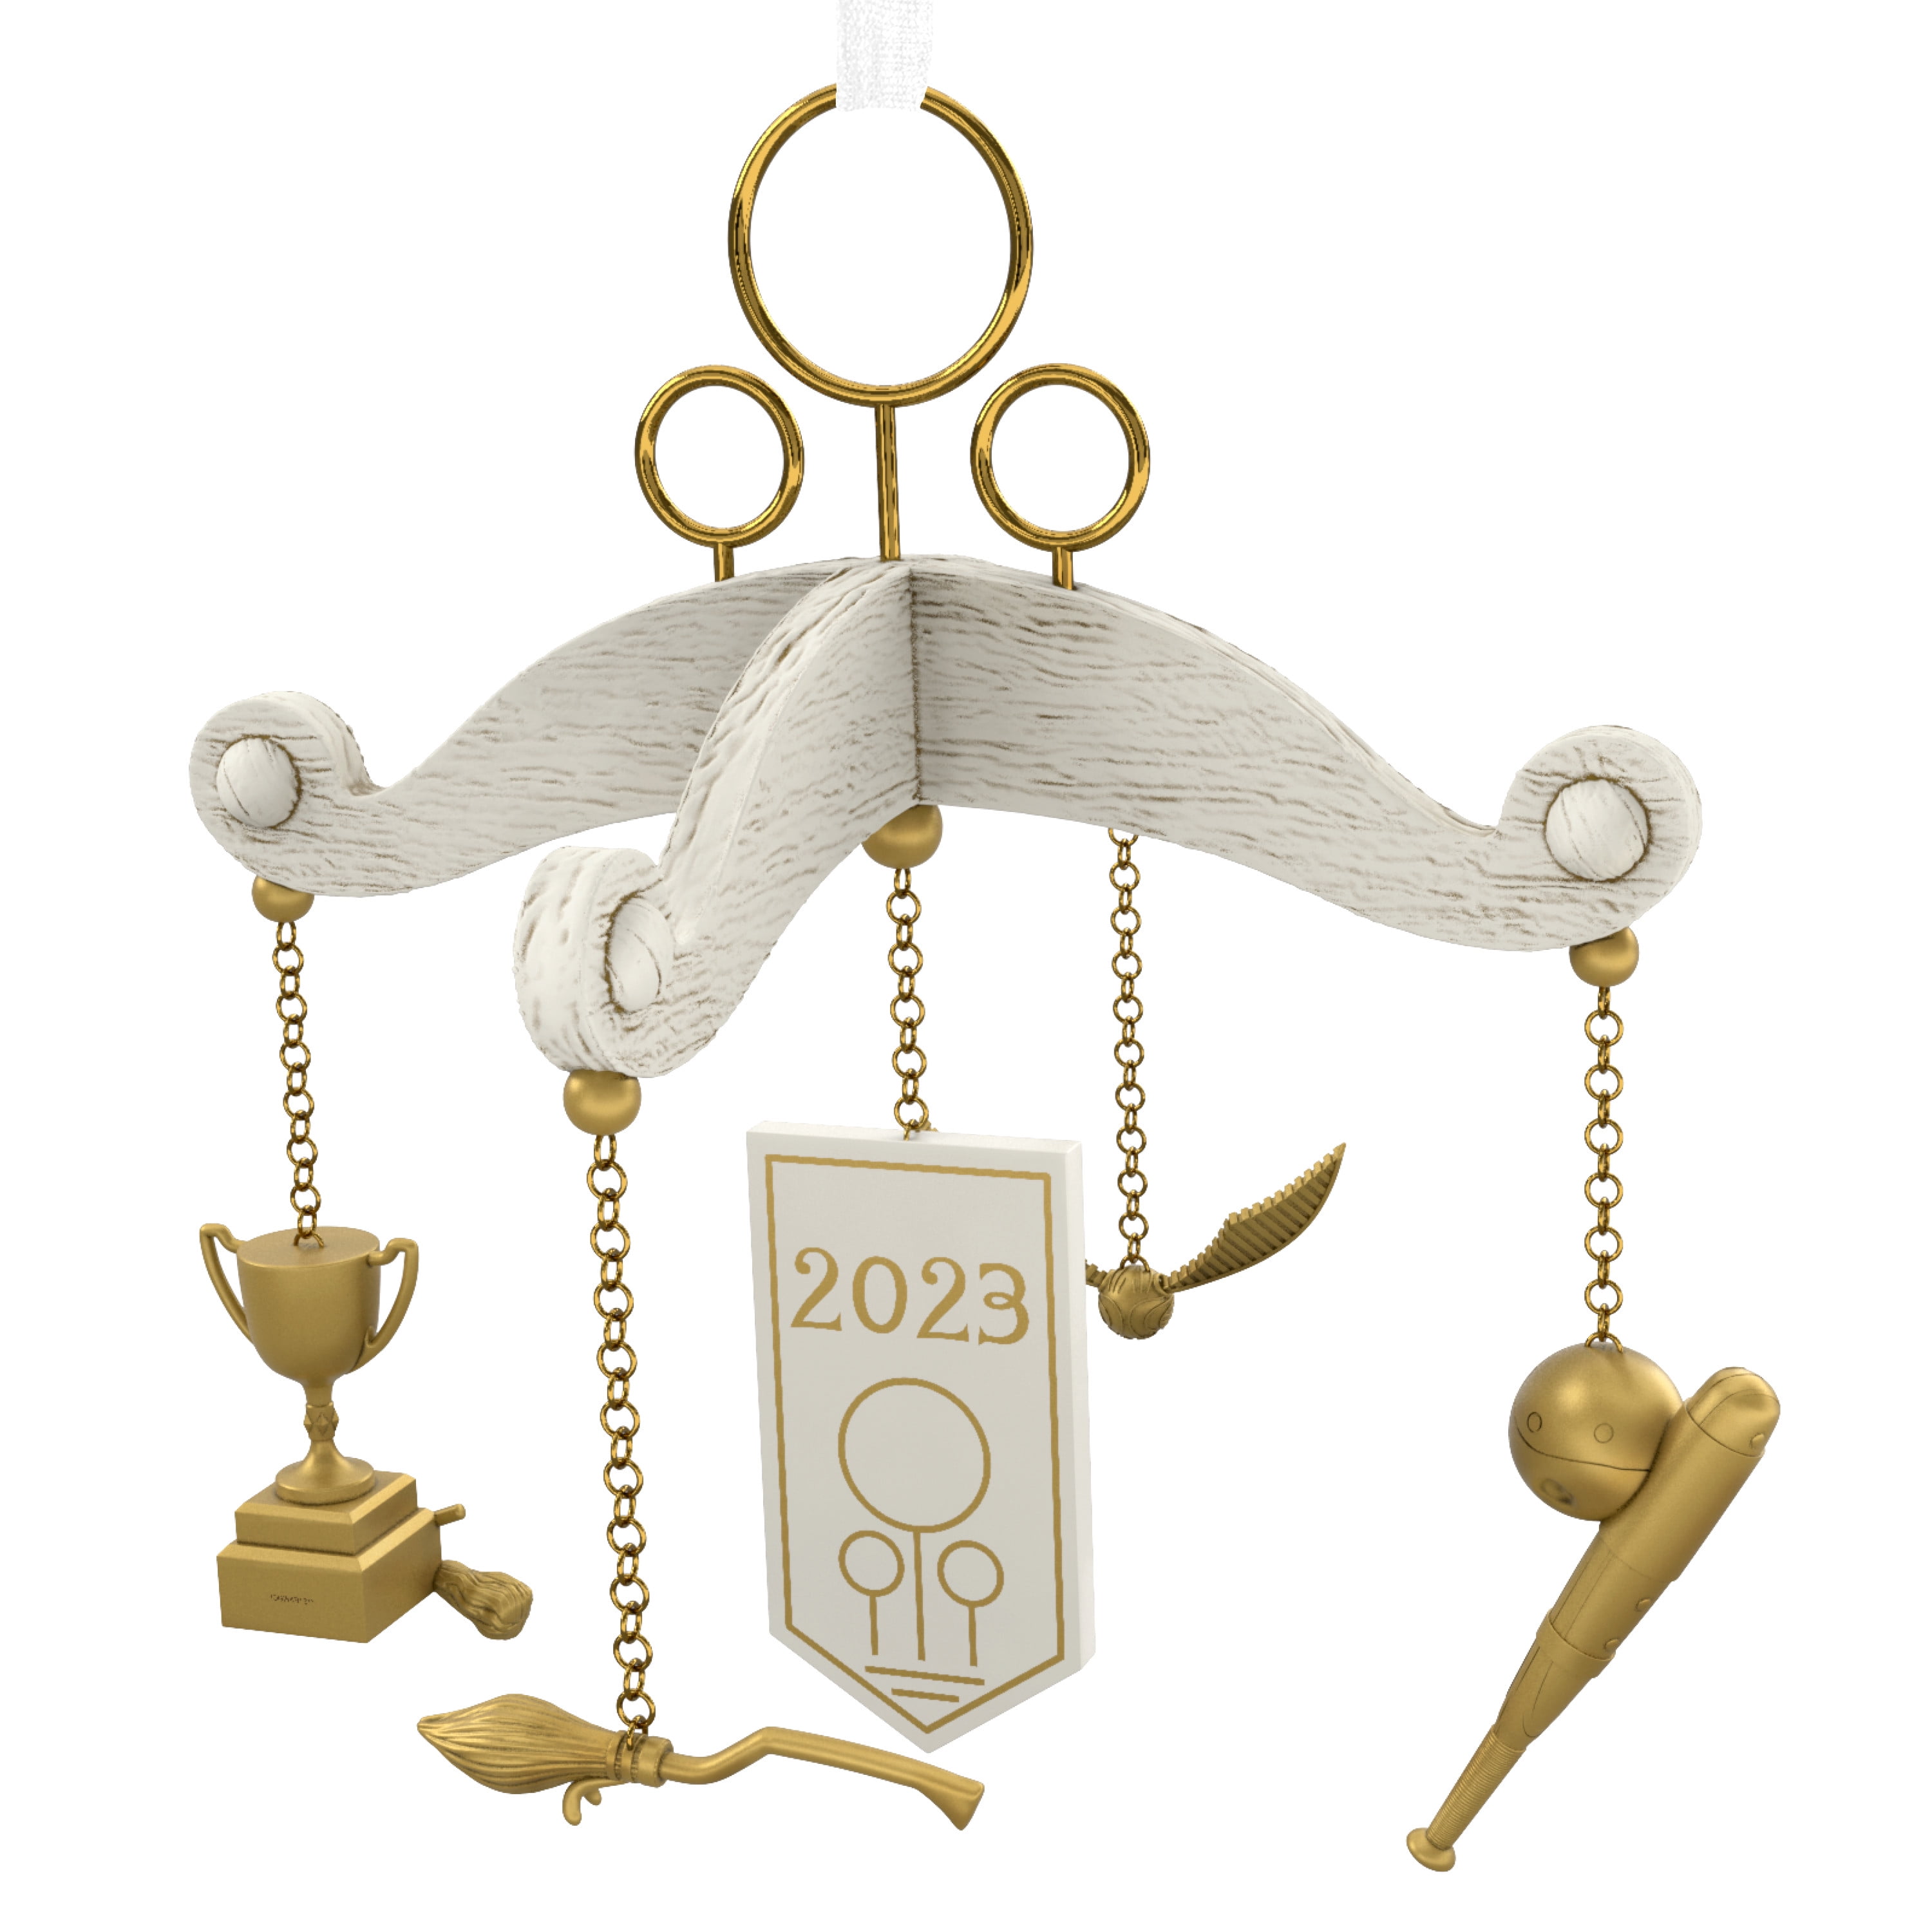 At Auction: (3) Hallmark Keepsakes Harry Potter Ornaments